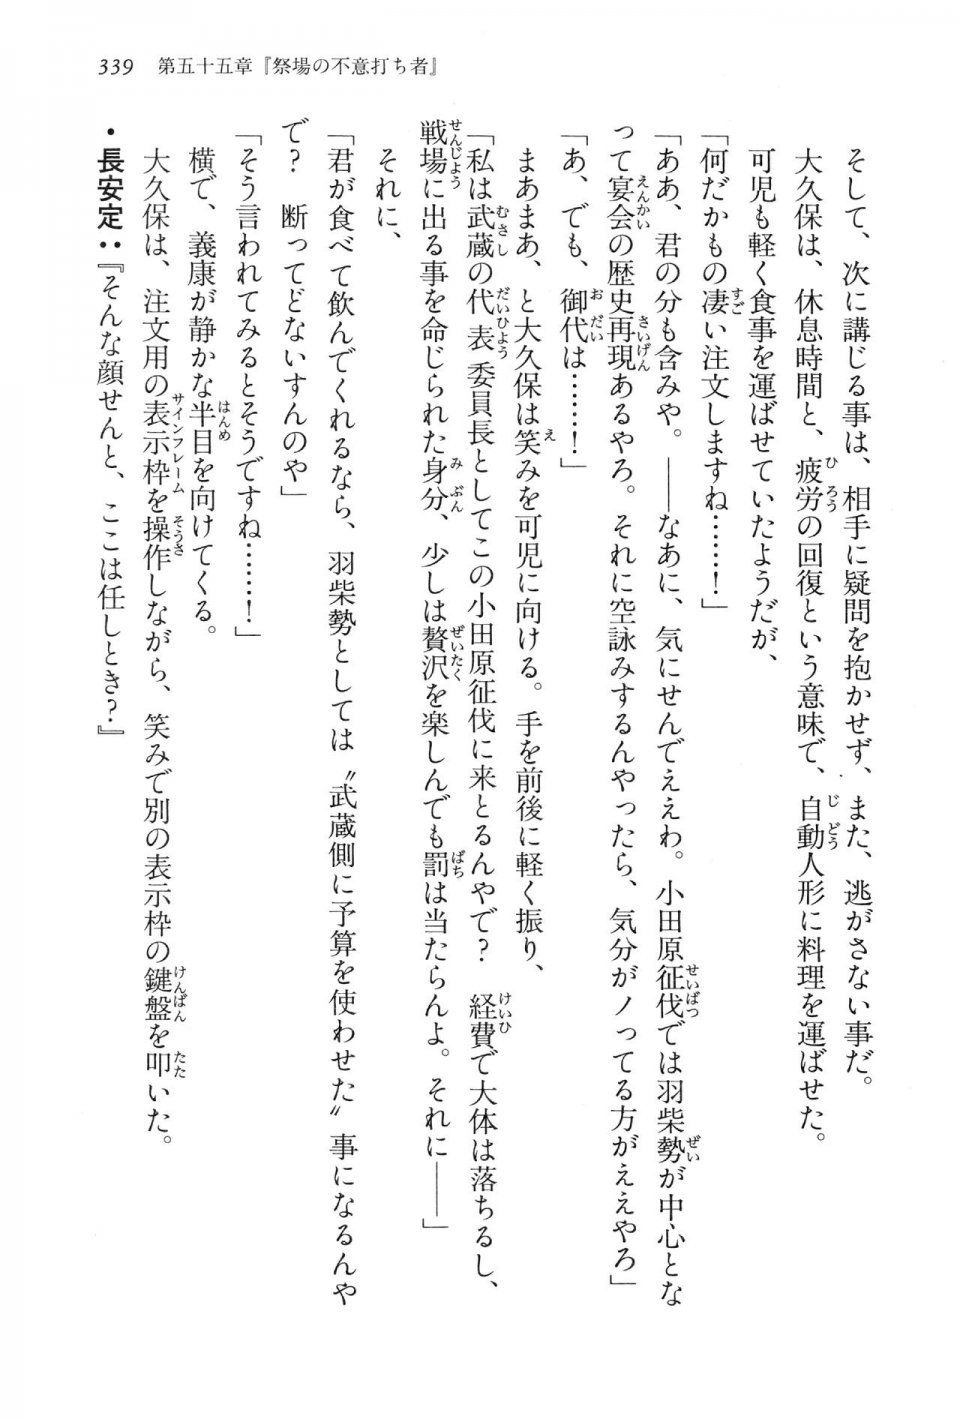 Kyoukai Senjou no Horizon LN Vol 15(6C) Part 1 - Photo #339